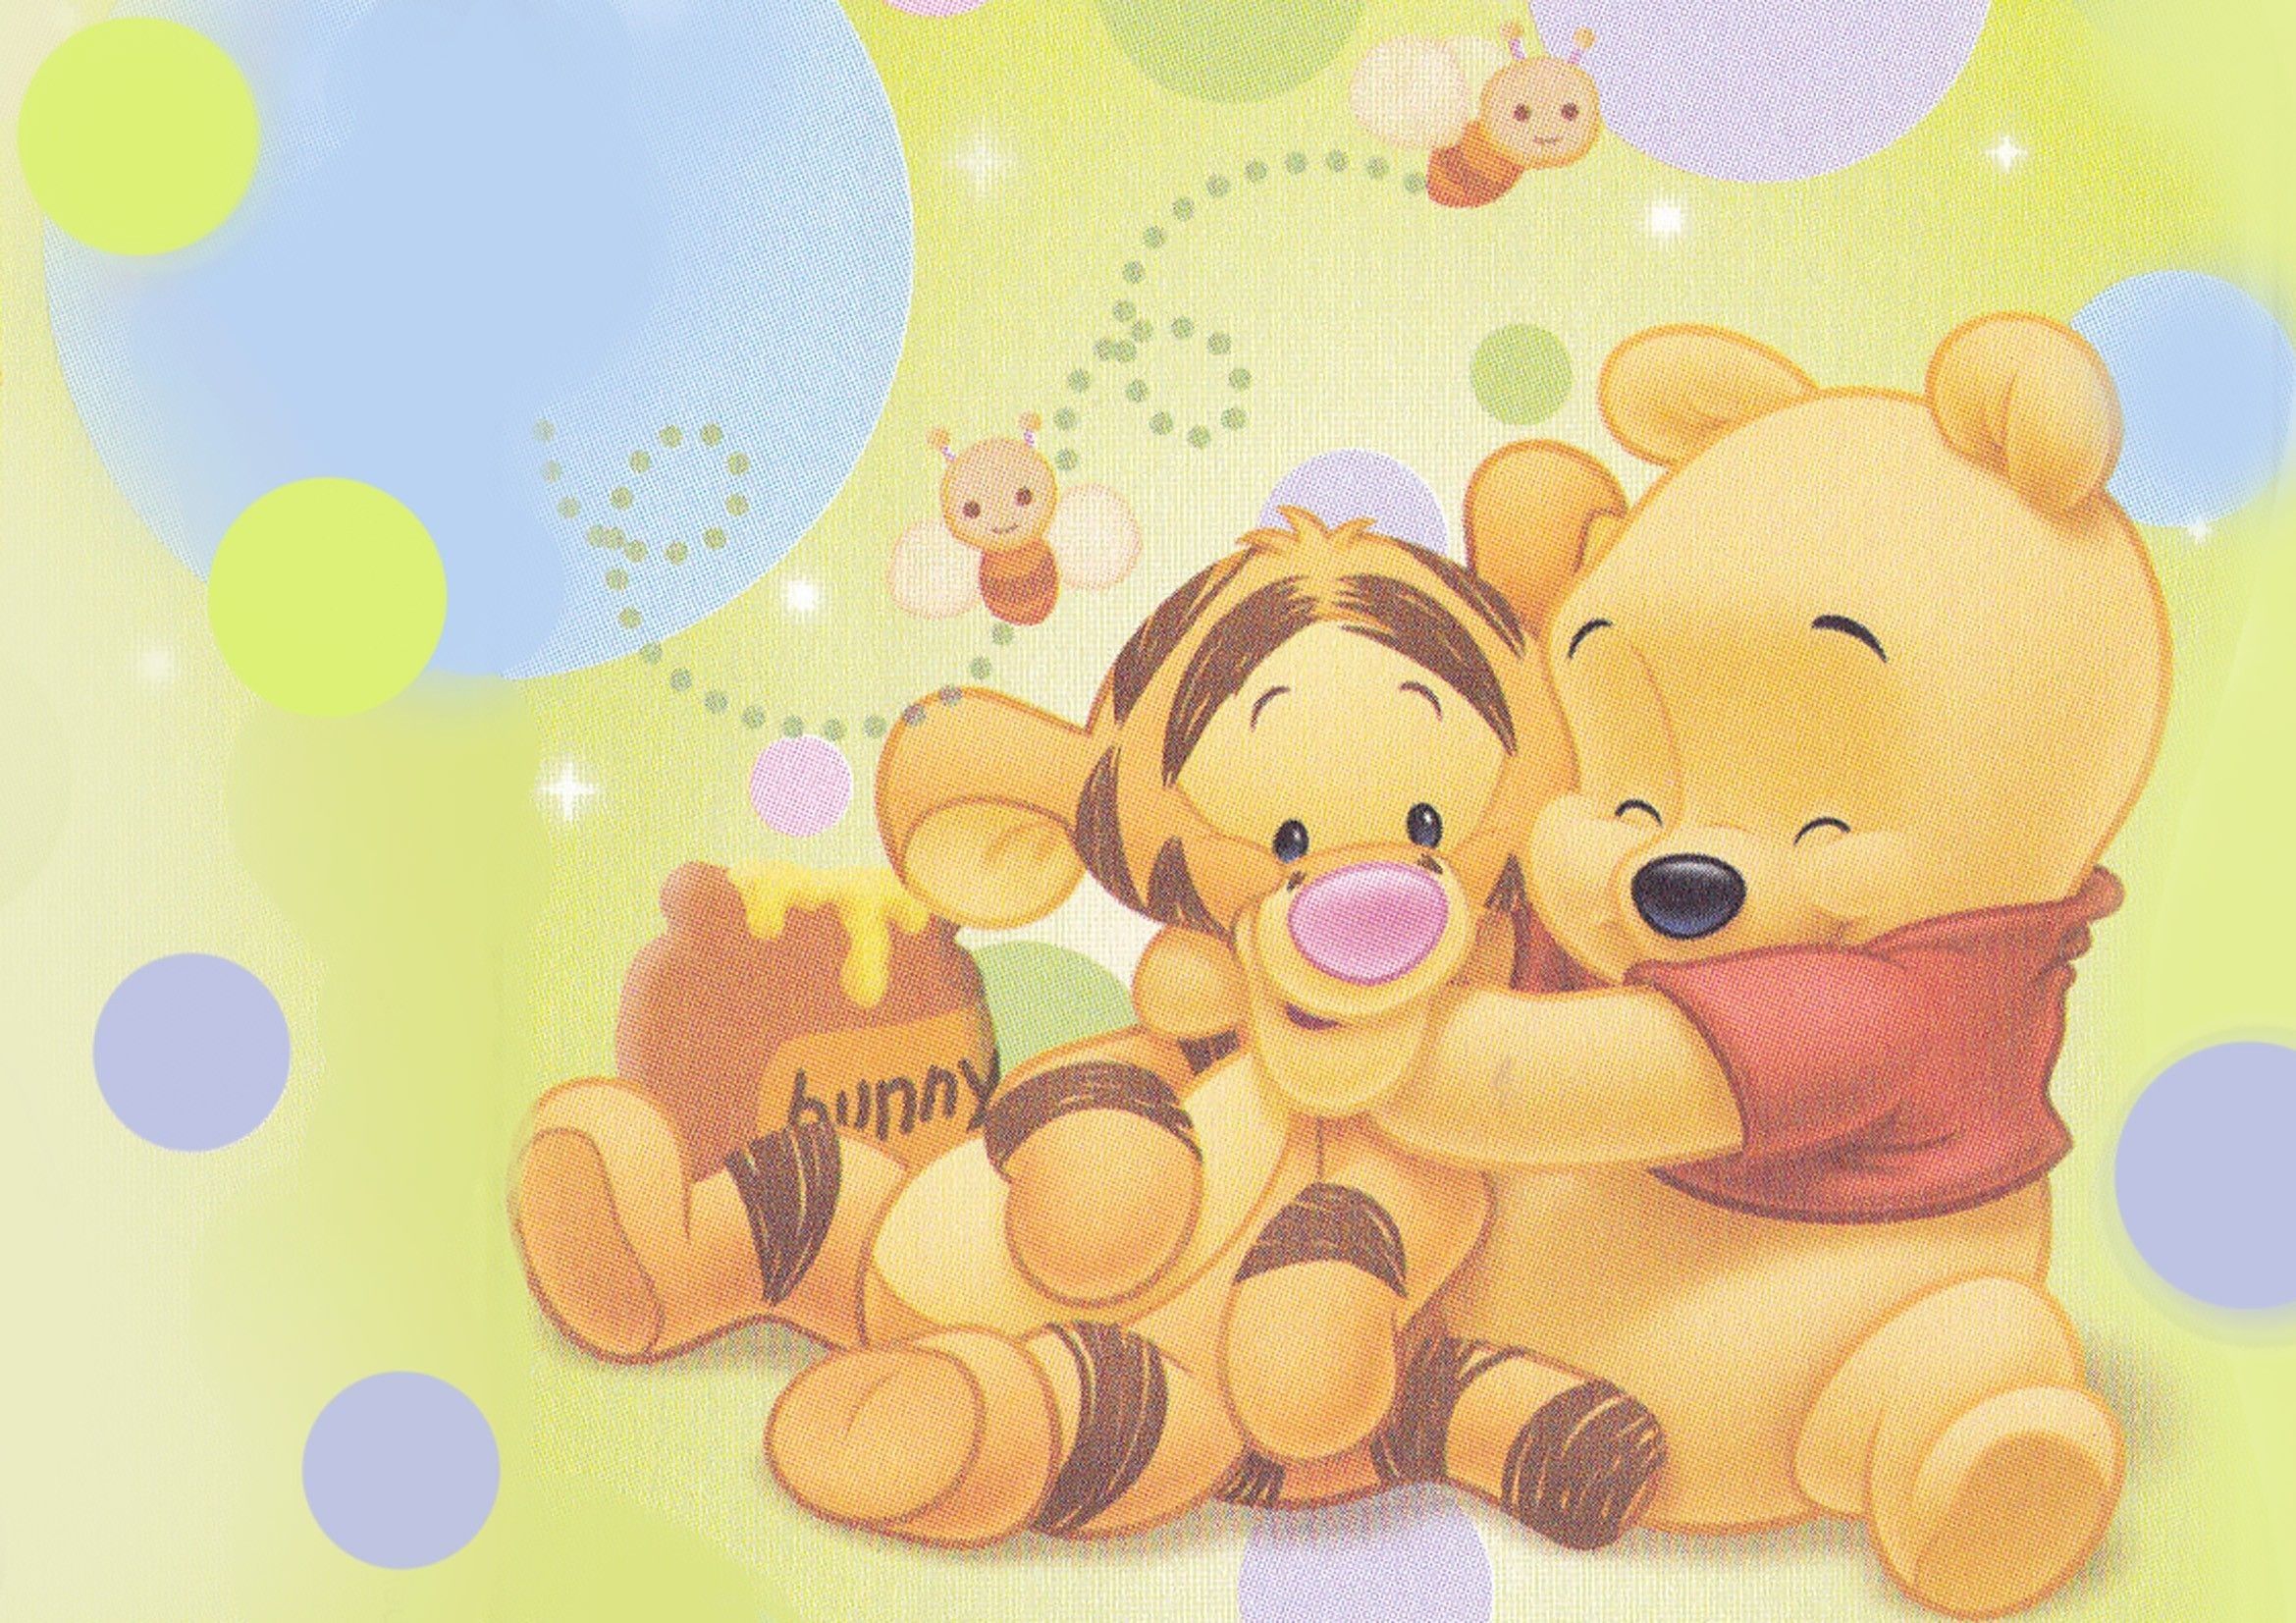 Classic Winnie the Pooh Wallpaper